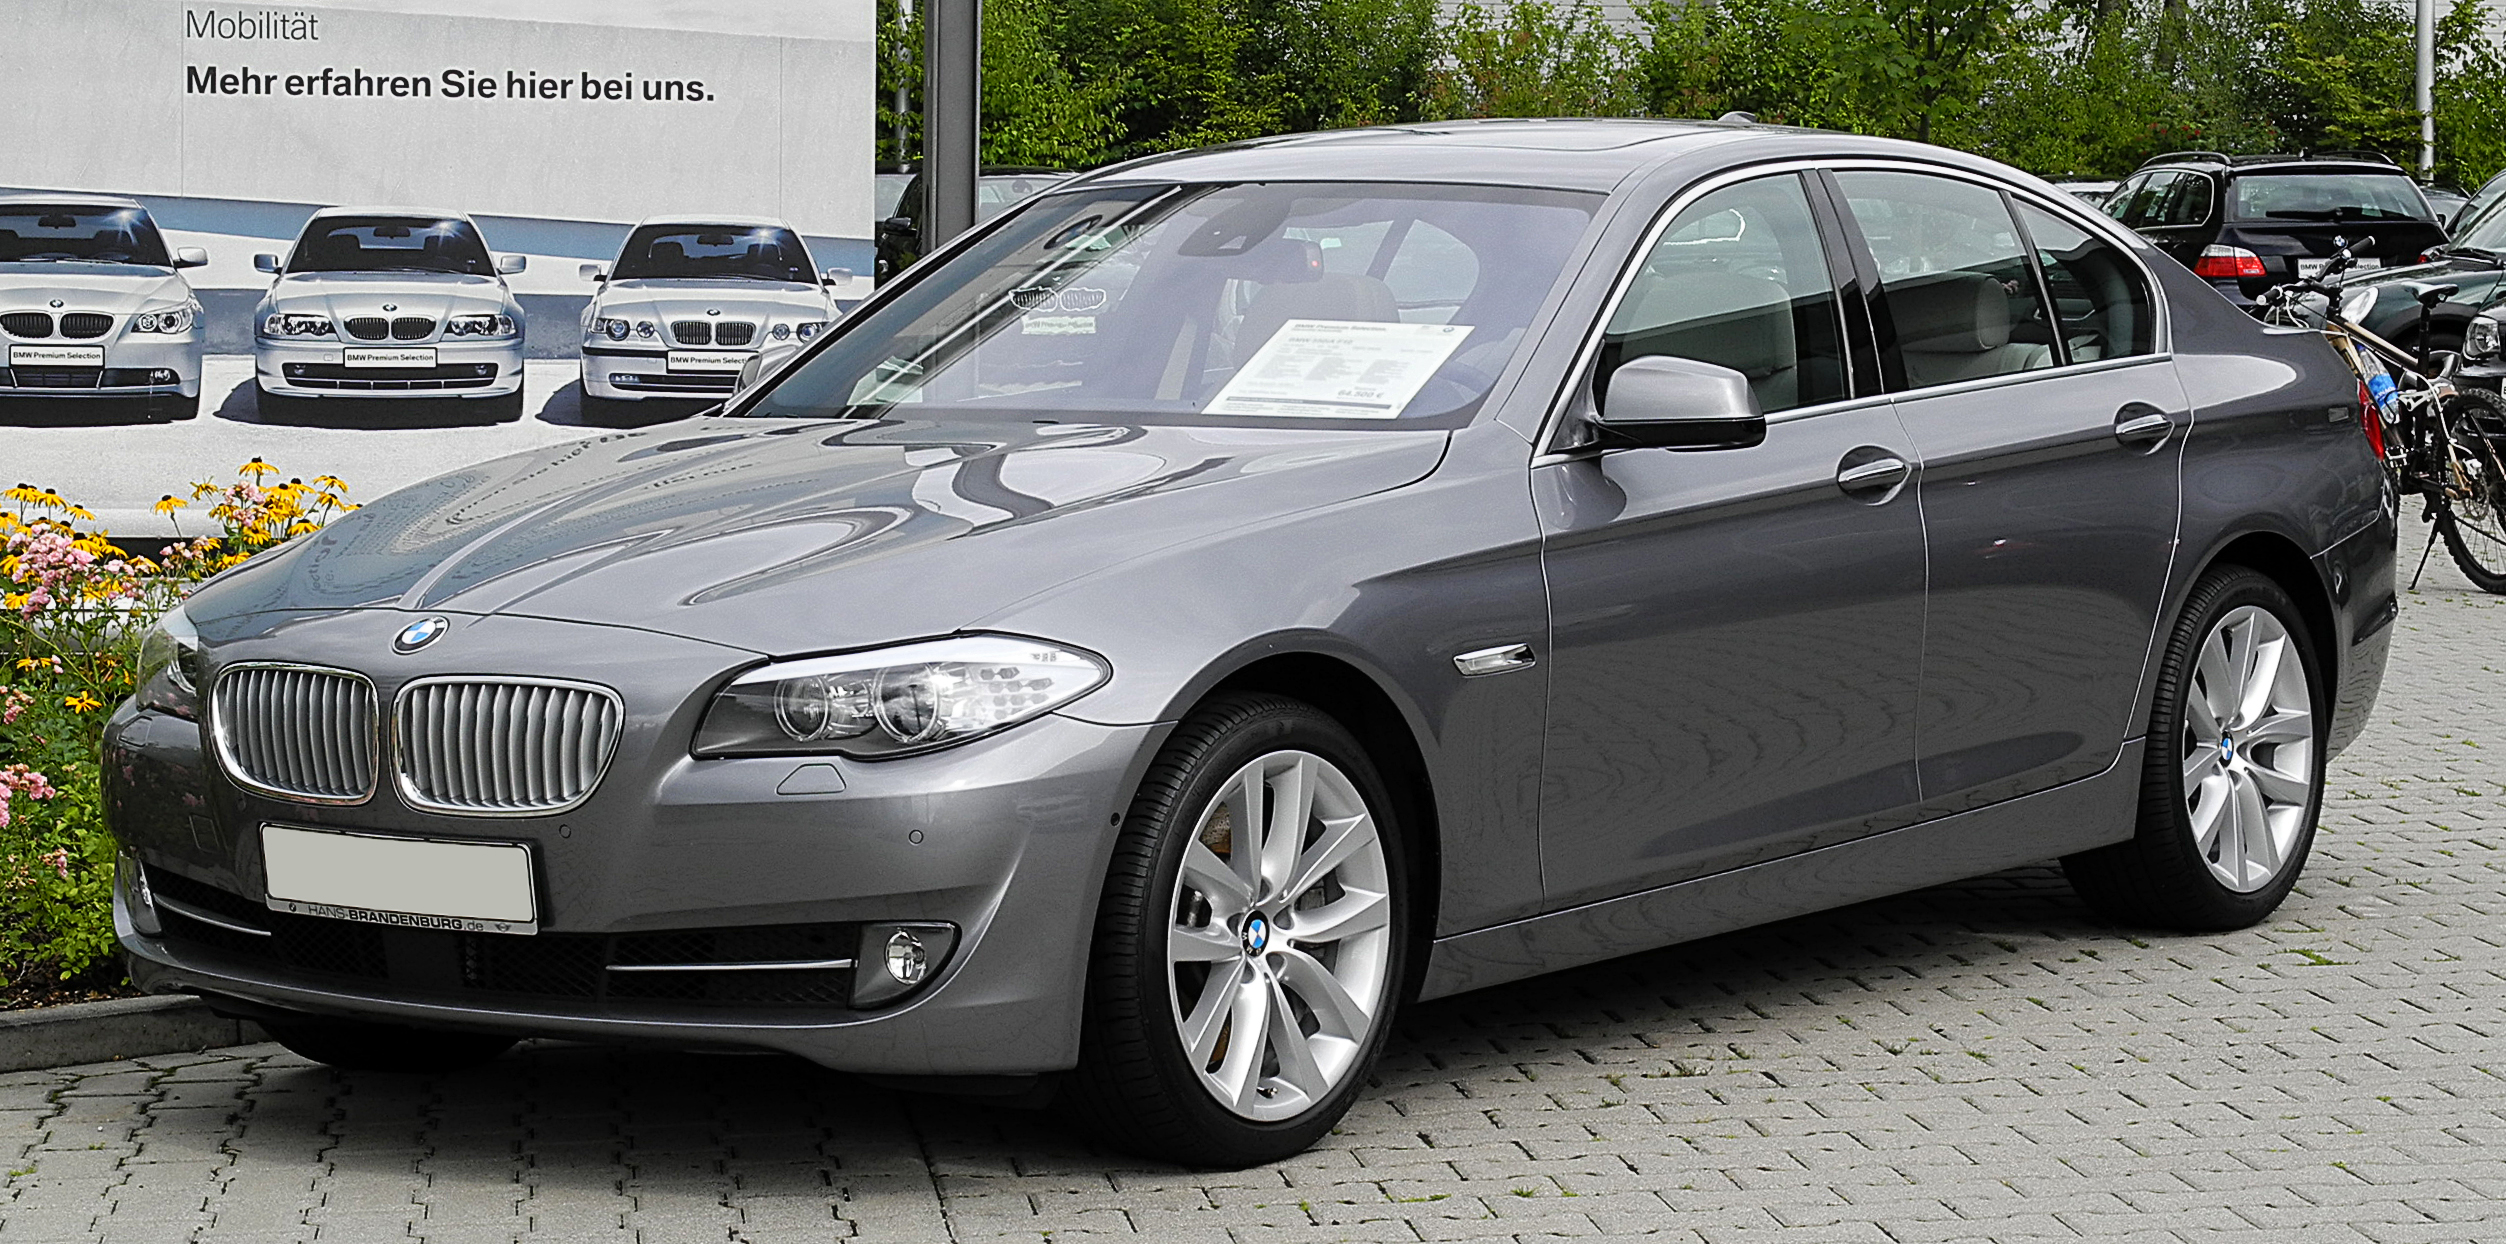 BMW 550i (F10) – Frontansicht (2), 17. Juli 2011, Mettmann